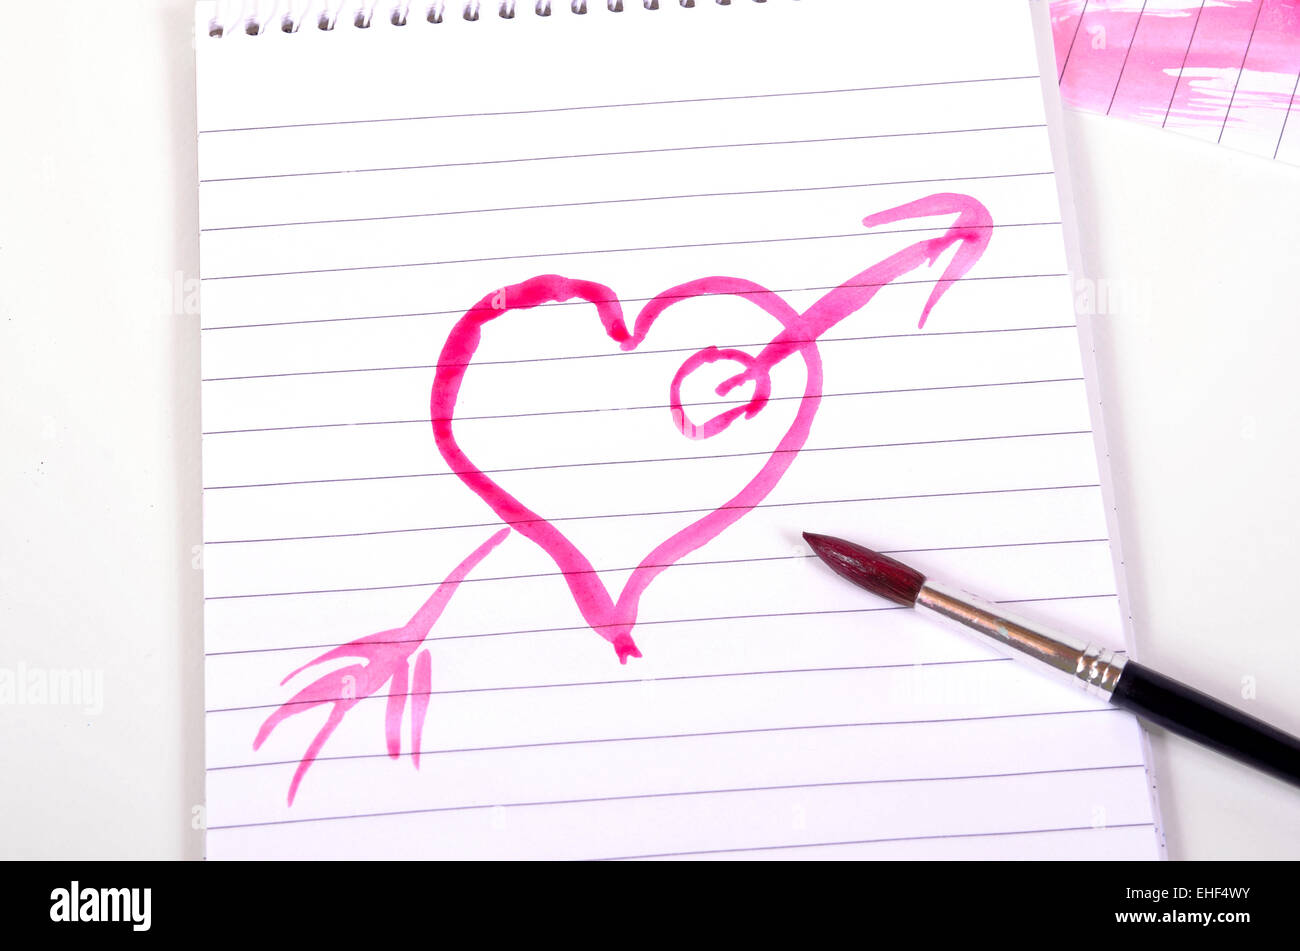 Paint brush drawing love hearts Stock Photo